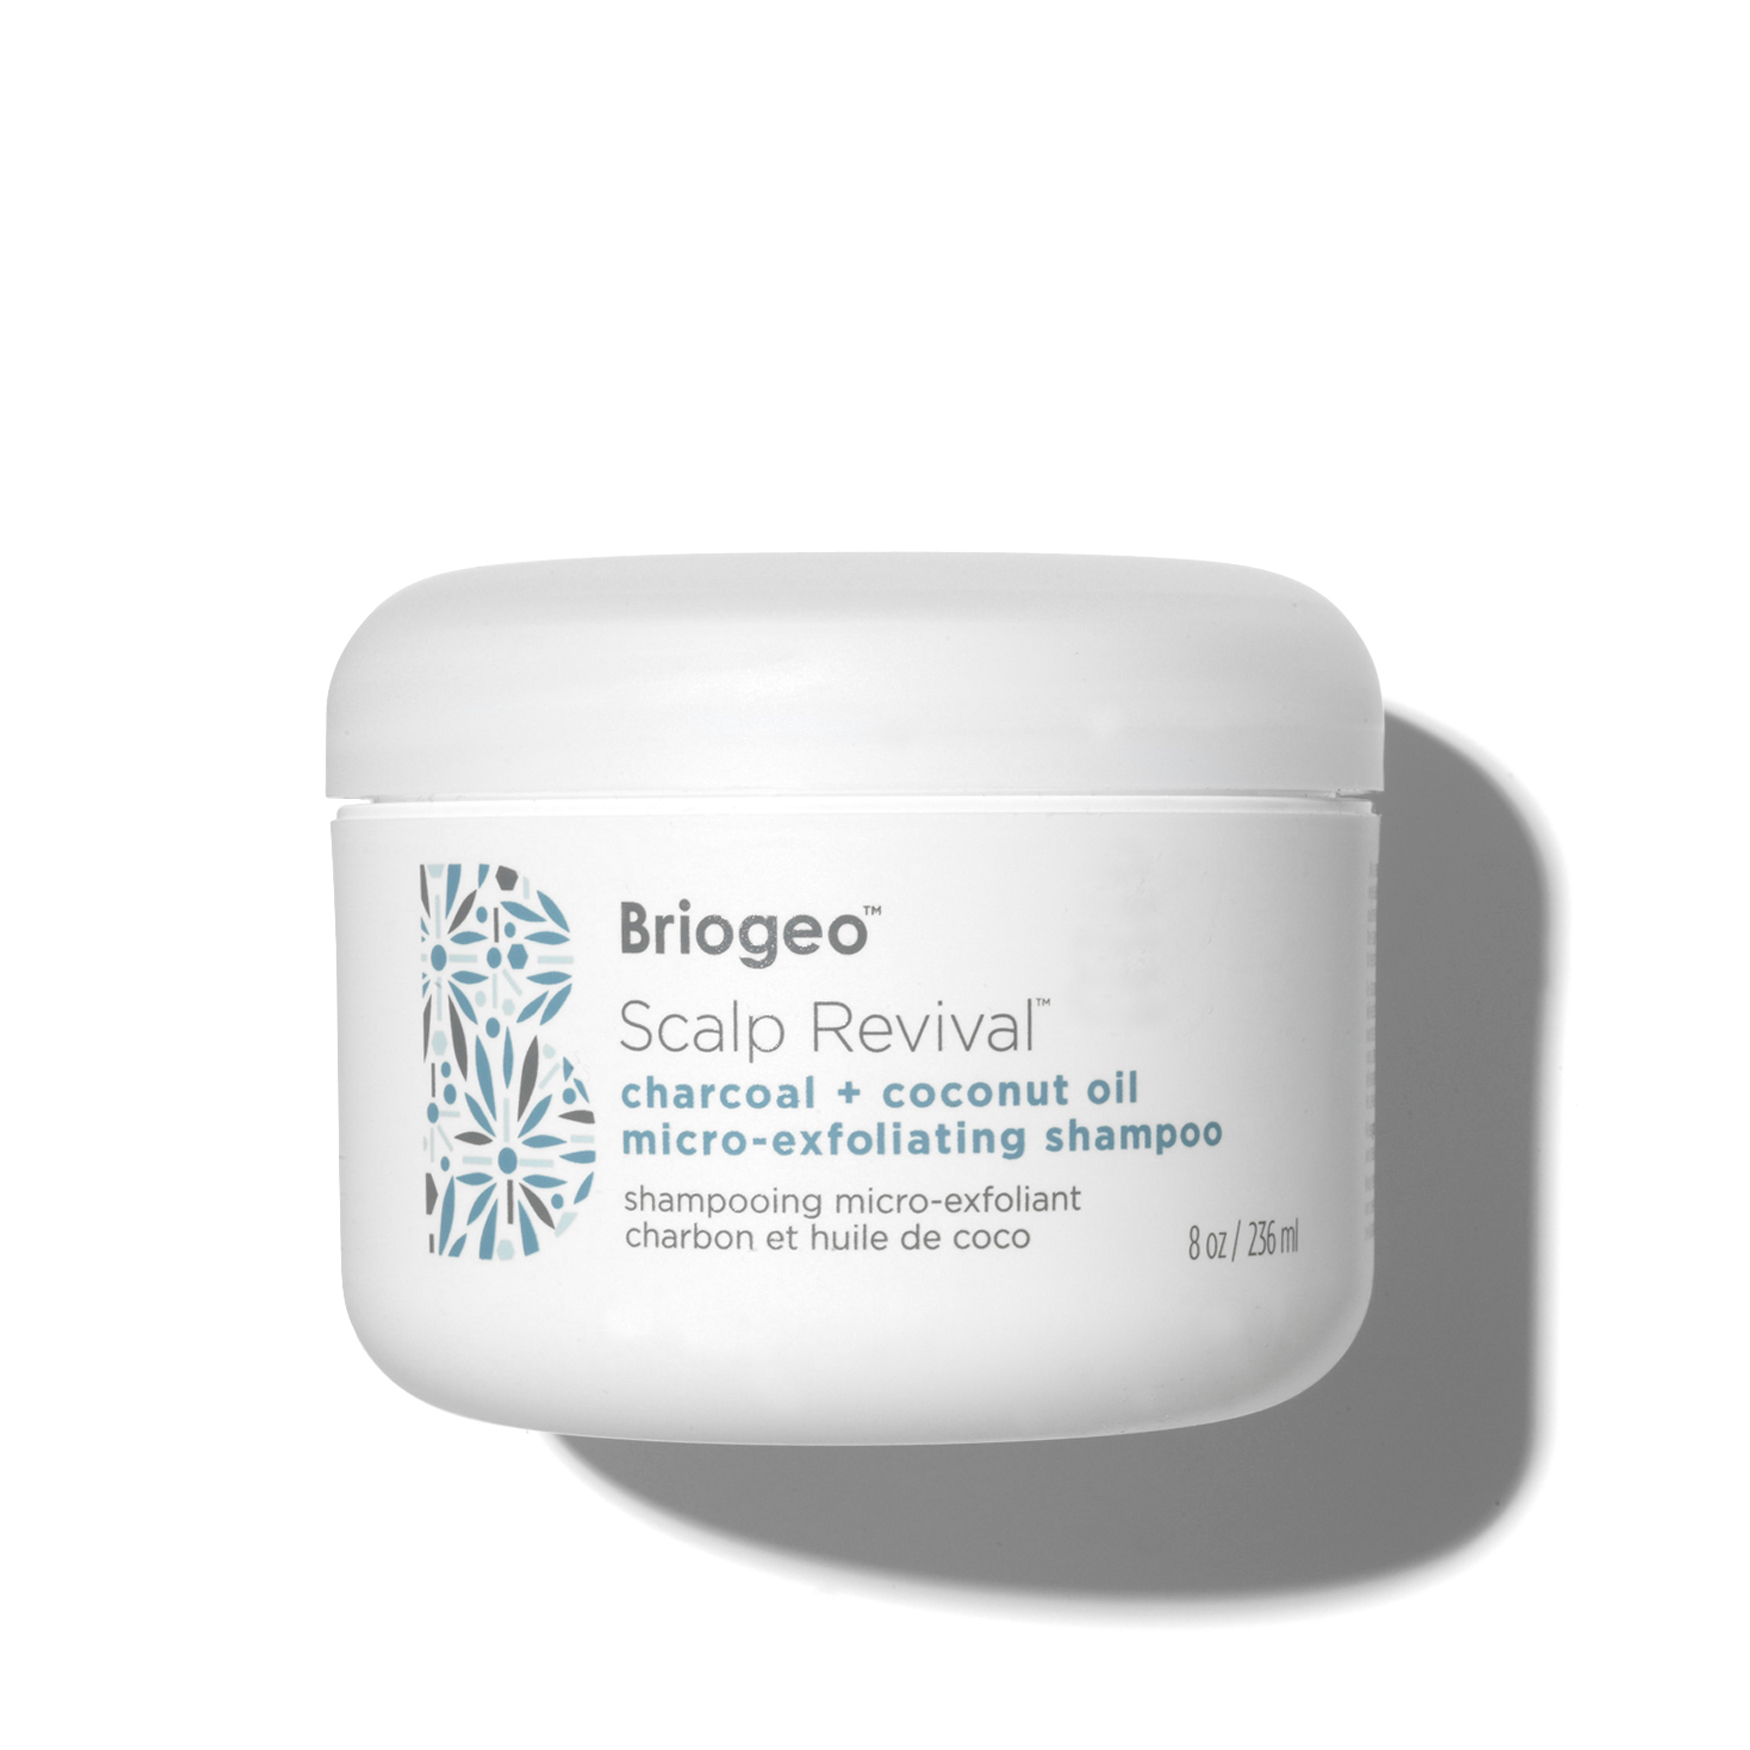 Briogeo Scalp Revival™ Charcoal + Coconut Oil Micro-exfoliating Shampoo